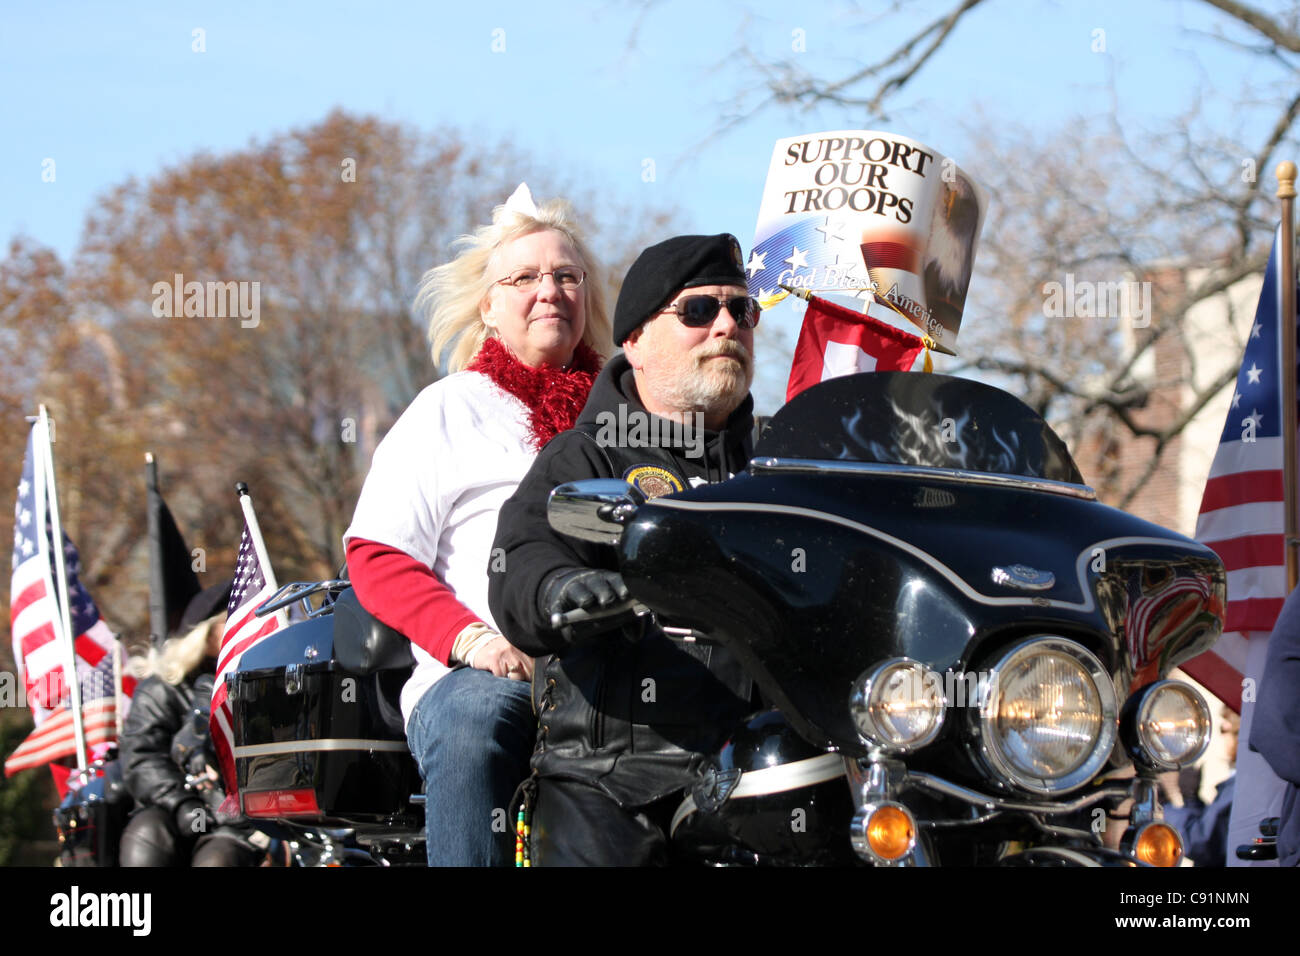 Veteranen Parade Milwaukee Wisconsin Motorradfahrer unterstützen unsere Truppen Stockfoto